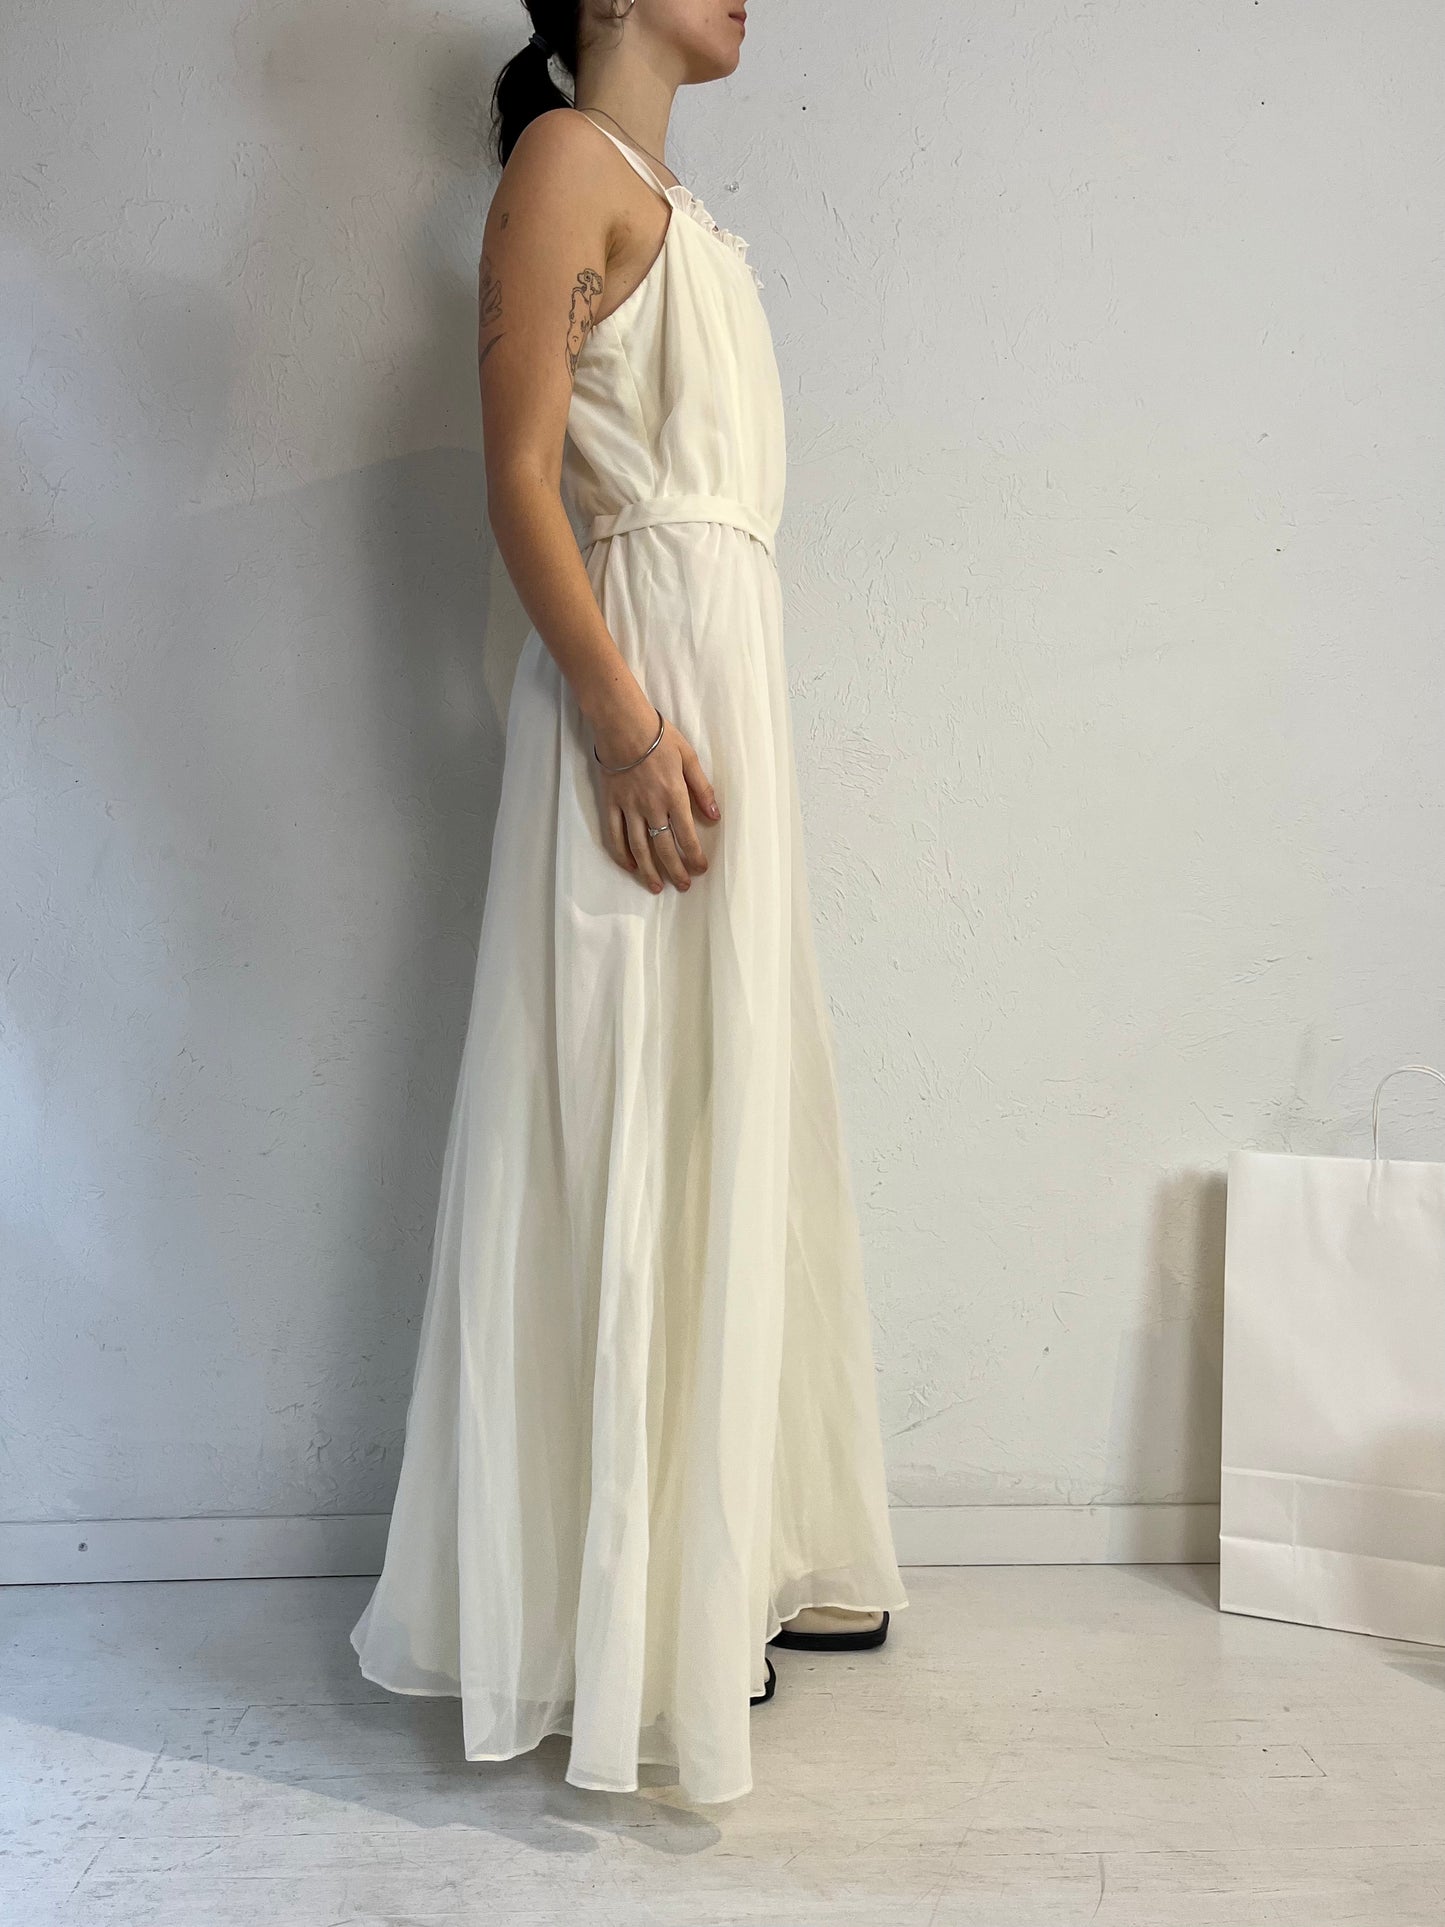 Vintage White Sleeveless Formal Maxi Dress / Medium